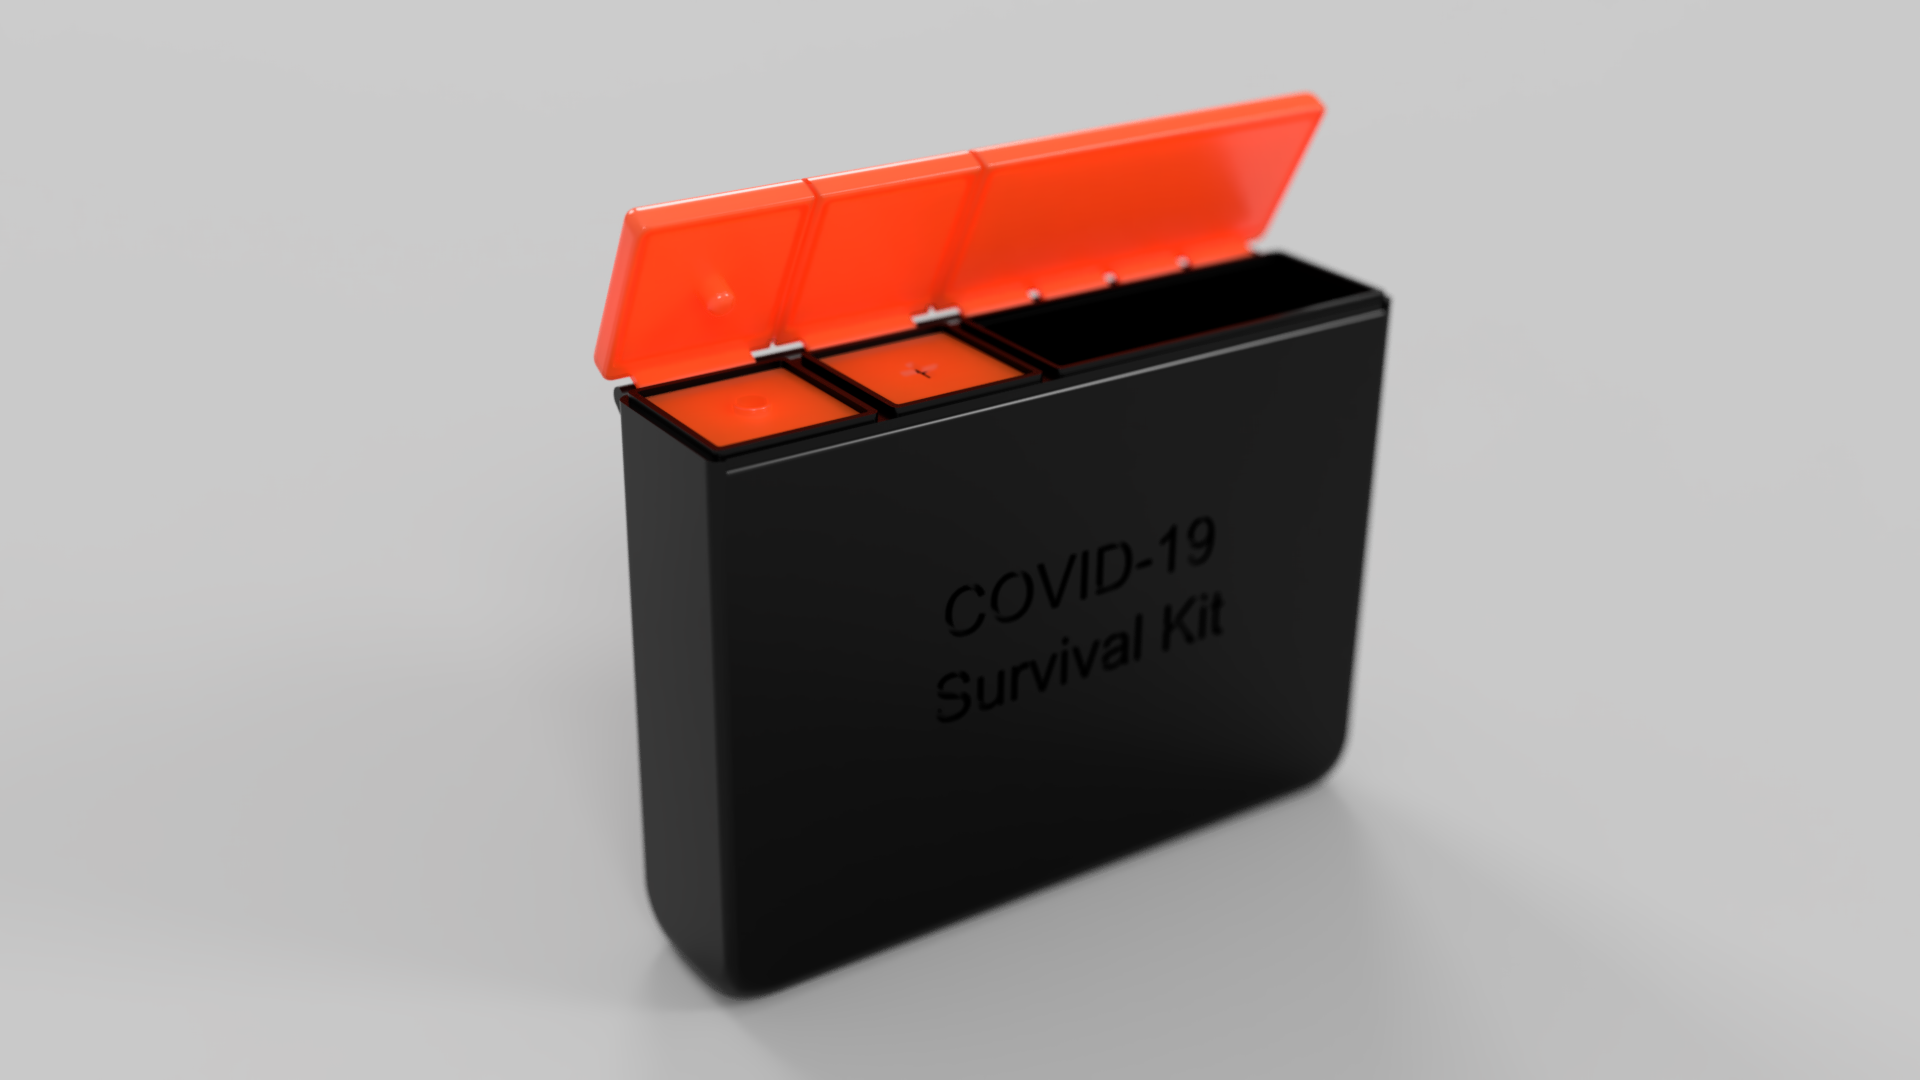 COVID-19 Survival Kit